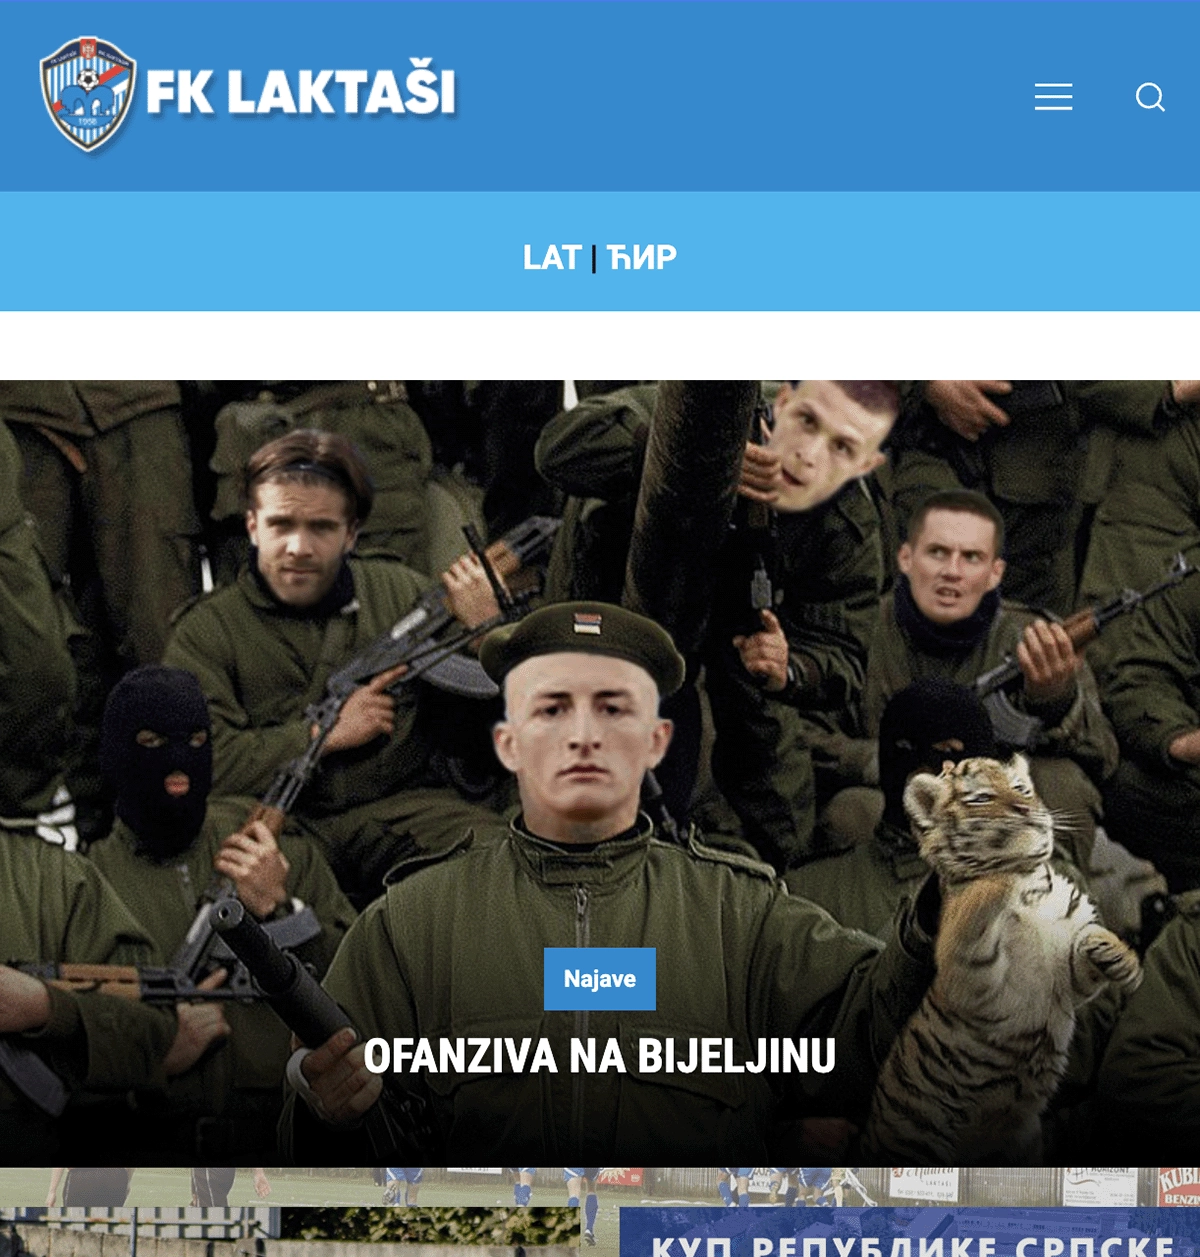 In October 2022, the website of soccer team FK Laktaši displayed an edited version of a Haviv photo labeled (in Bosnian) “Offensive on Bijeljina.”